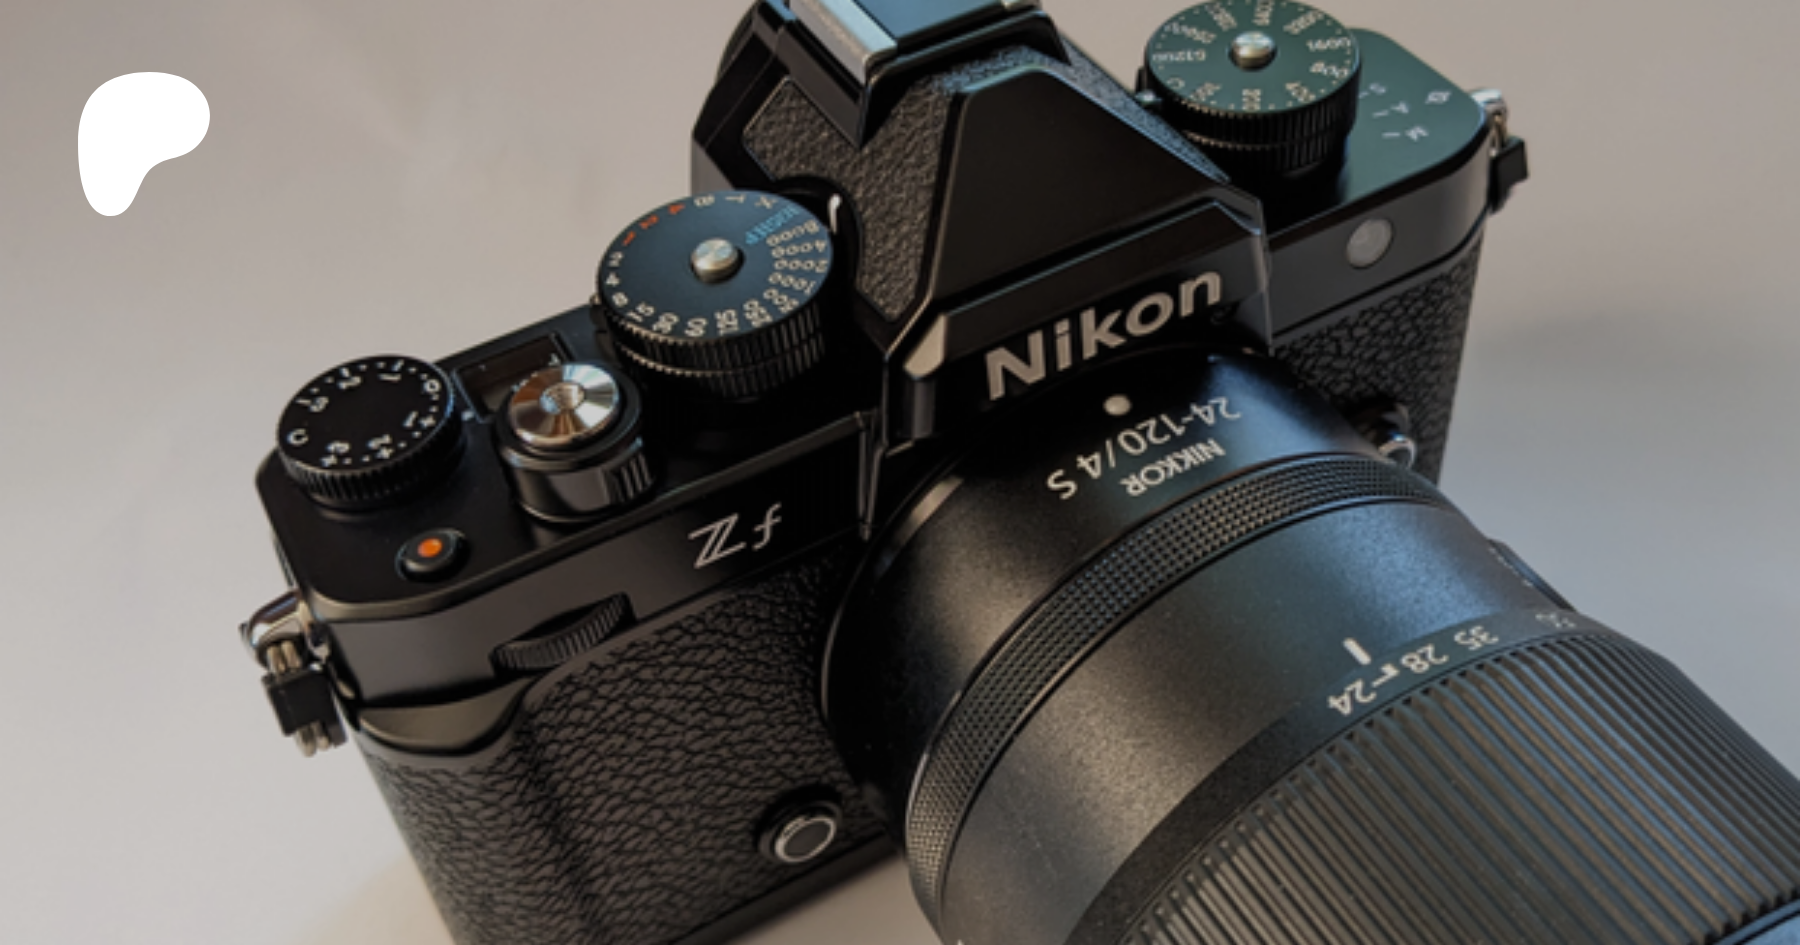 Nikon Zf review – a retro delight